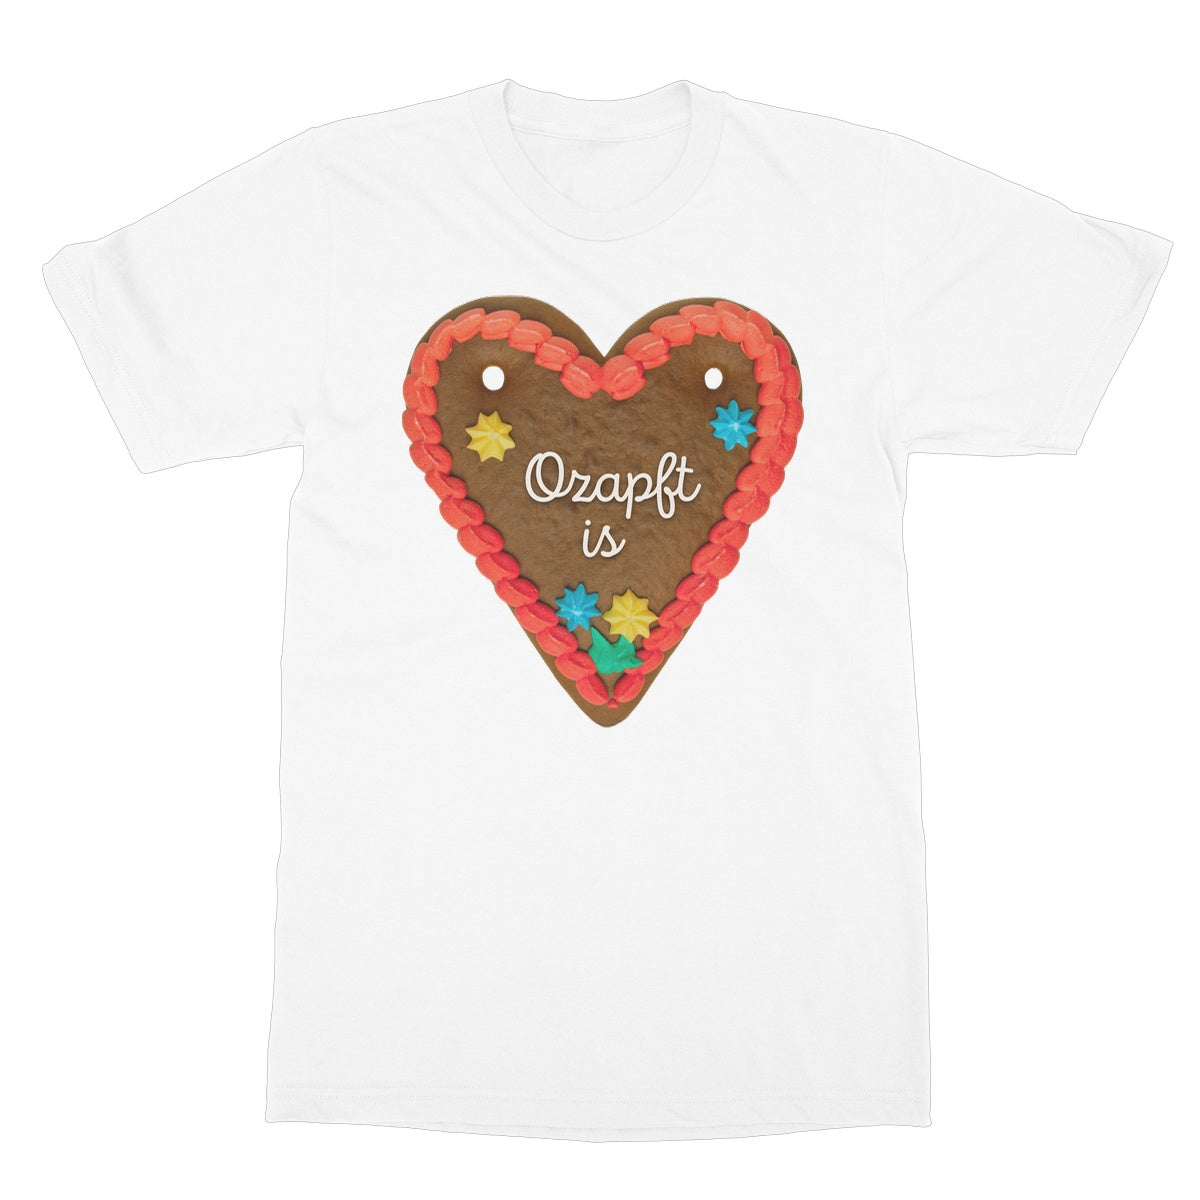 Women's Oktoberfest Graphic T-Shirt "O'zapft is" with gingerbread heart - 6 colours - Bavari Shop - Bavarian Outfits, Dirndl, Lederhosen & Accessories